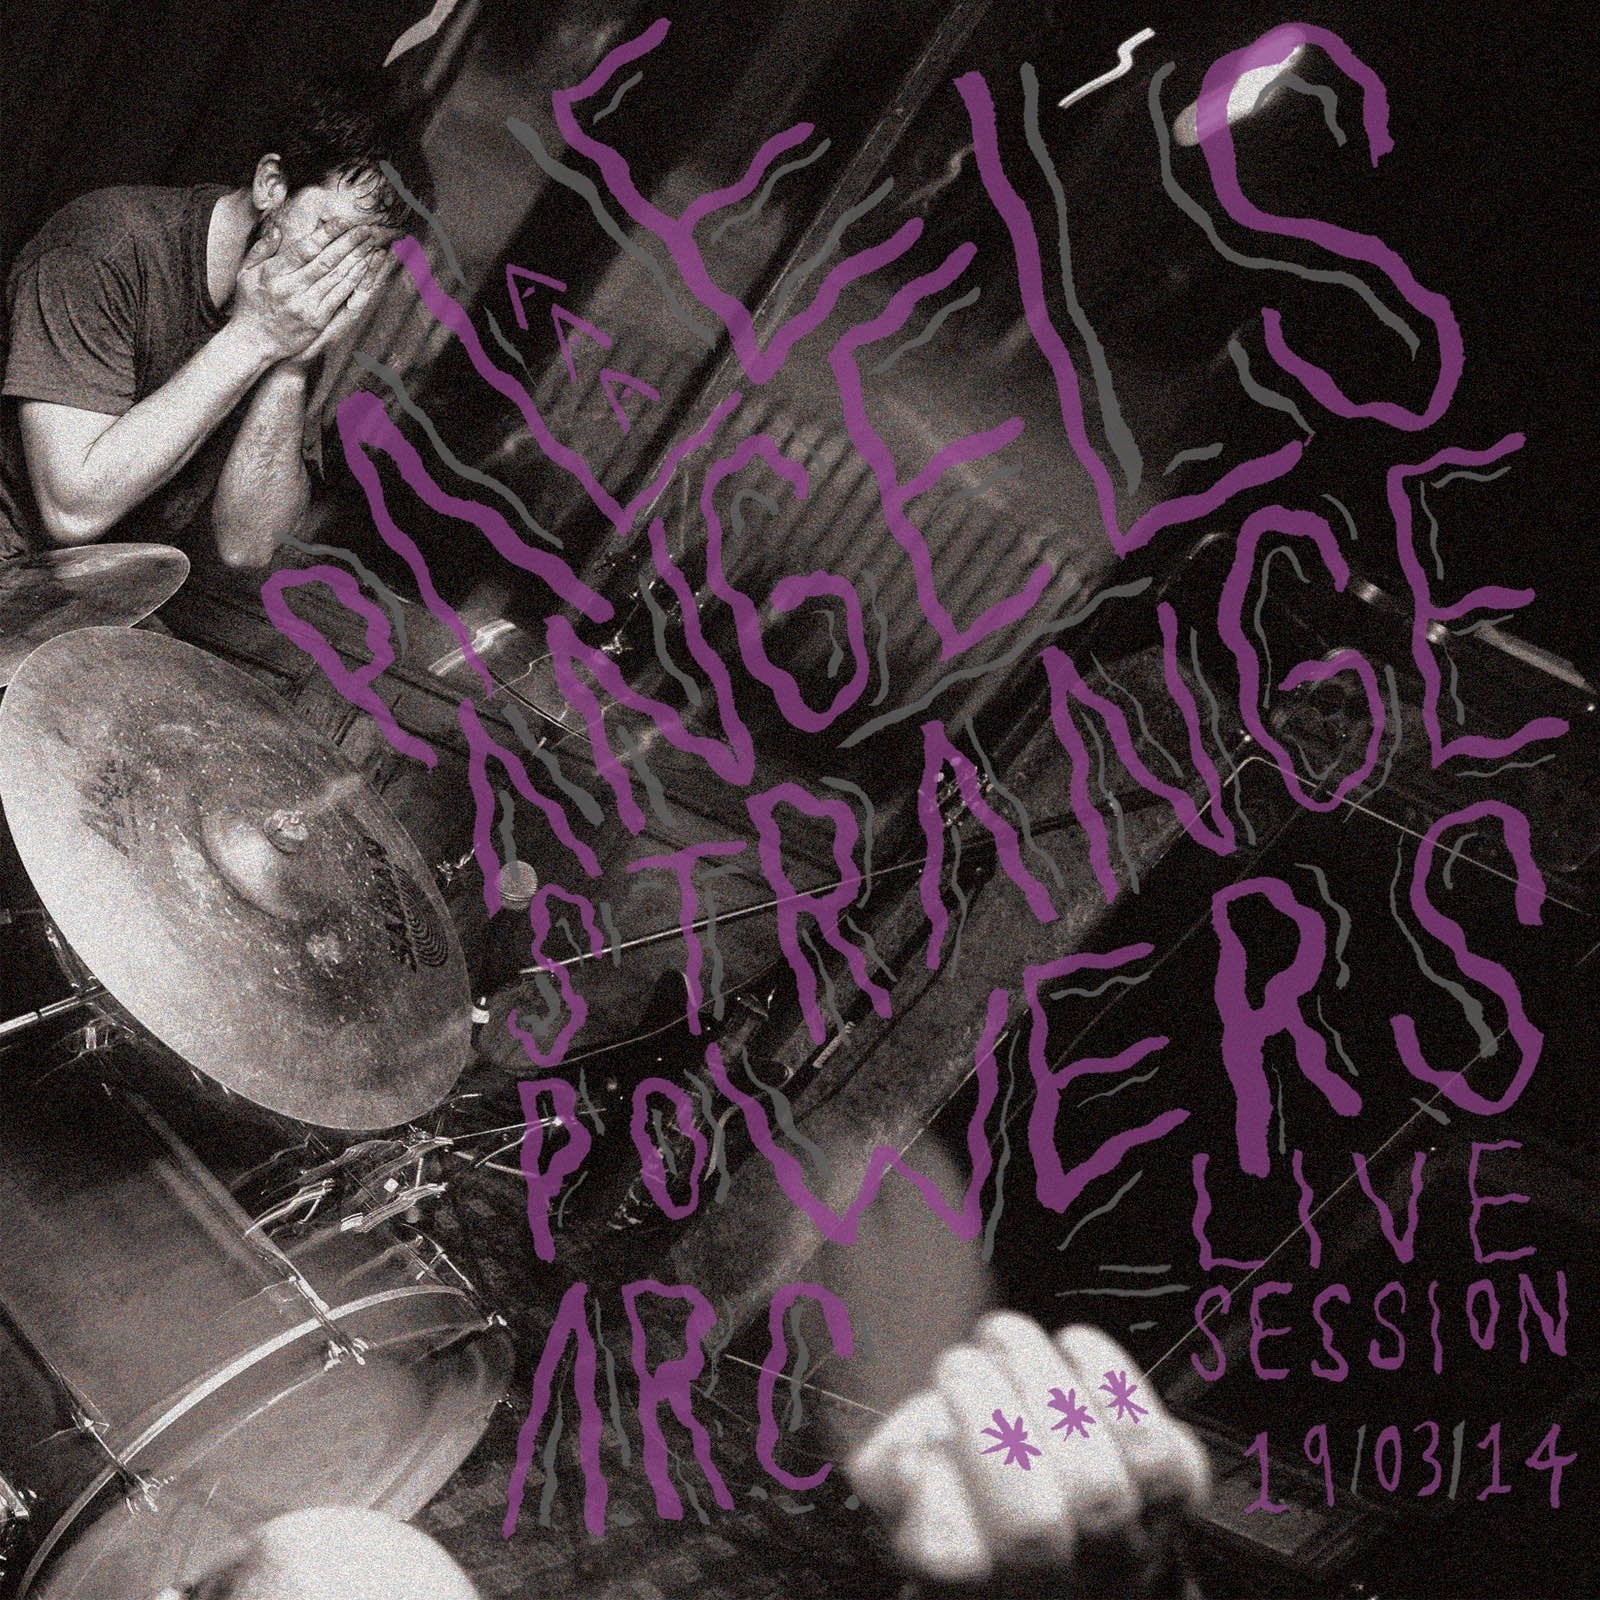 Pale Angels - Strange Powers (ARC Live Session) 7" - Vinyl - Specialist Subject Records